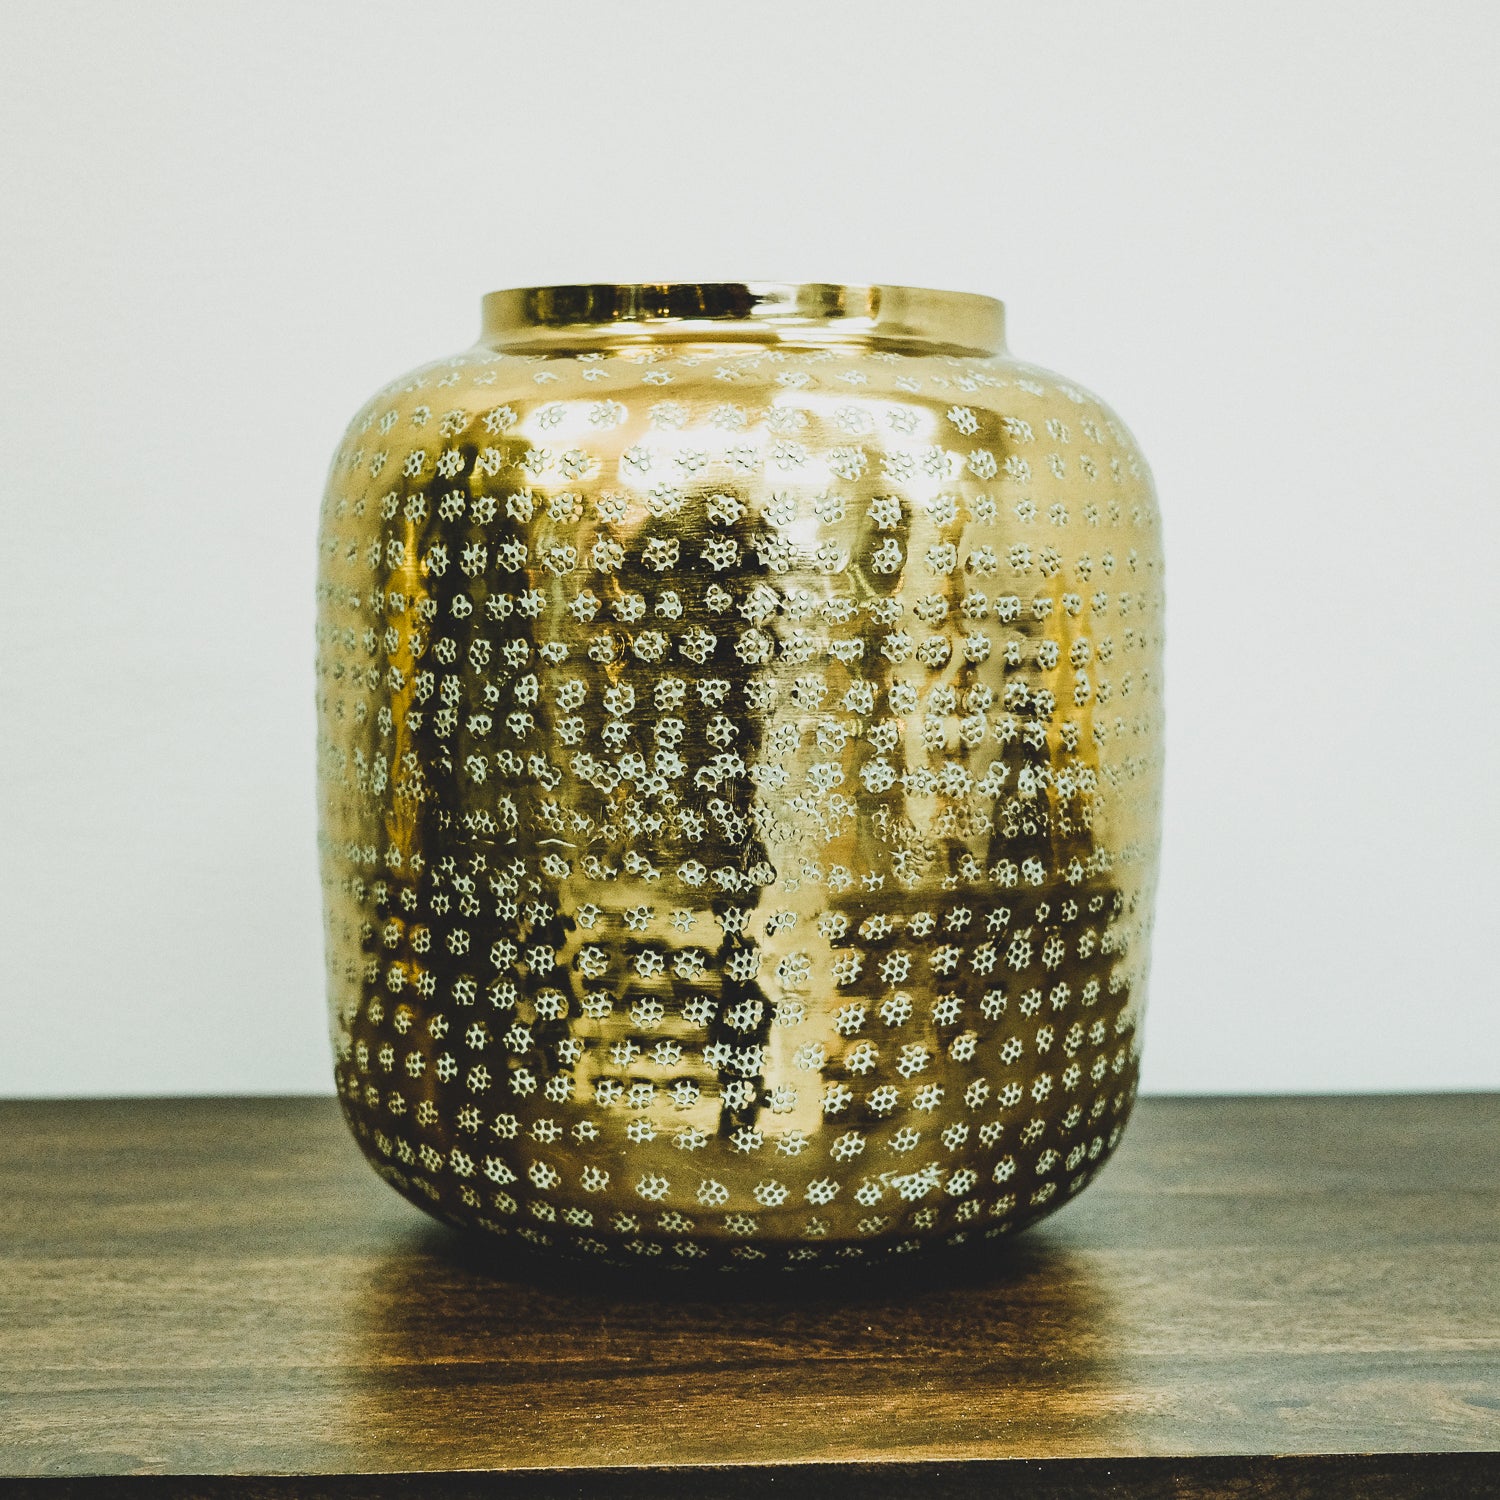 ART-Aluminum vase with golden engraved patterns